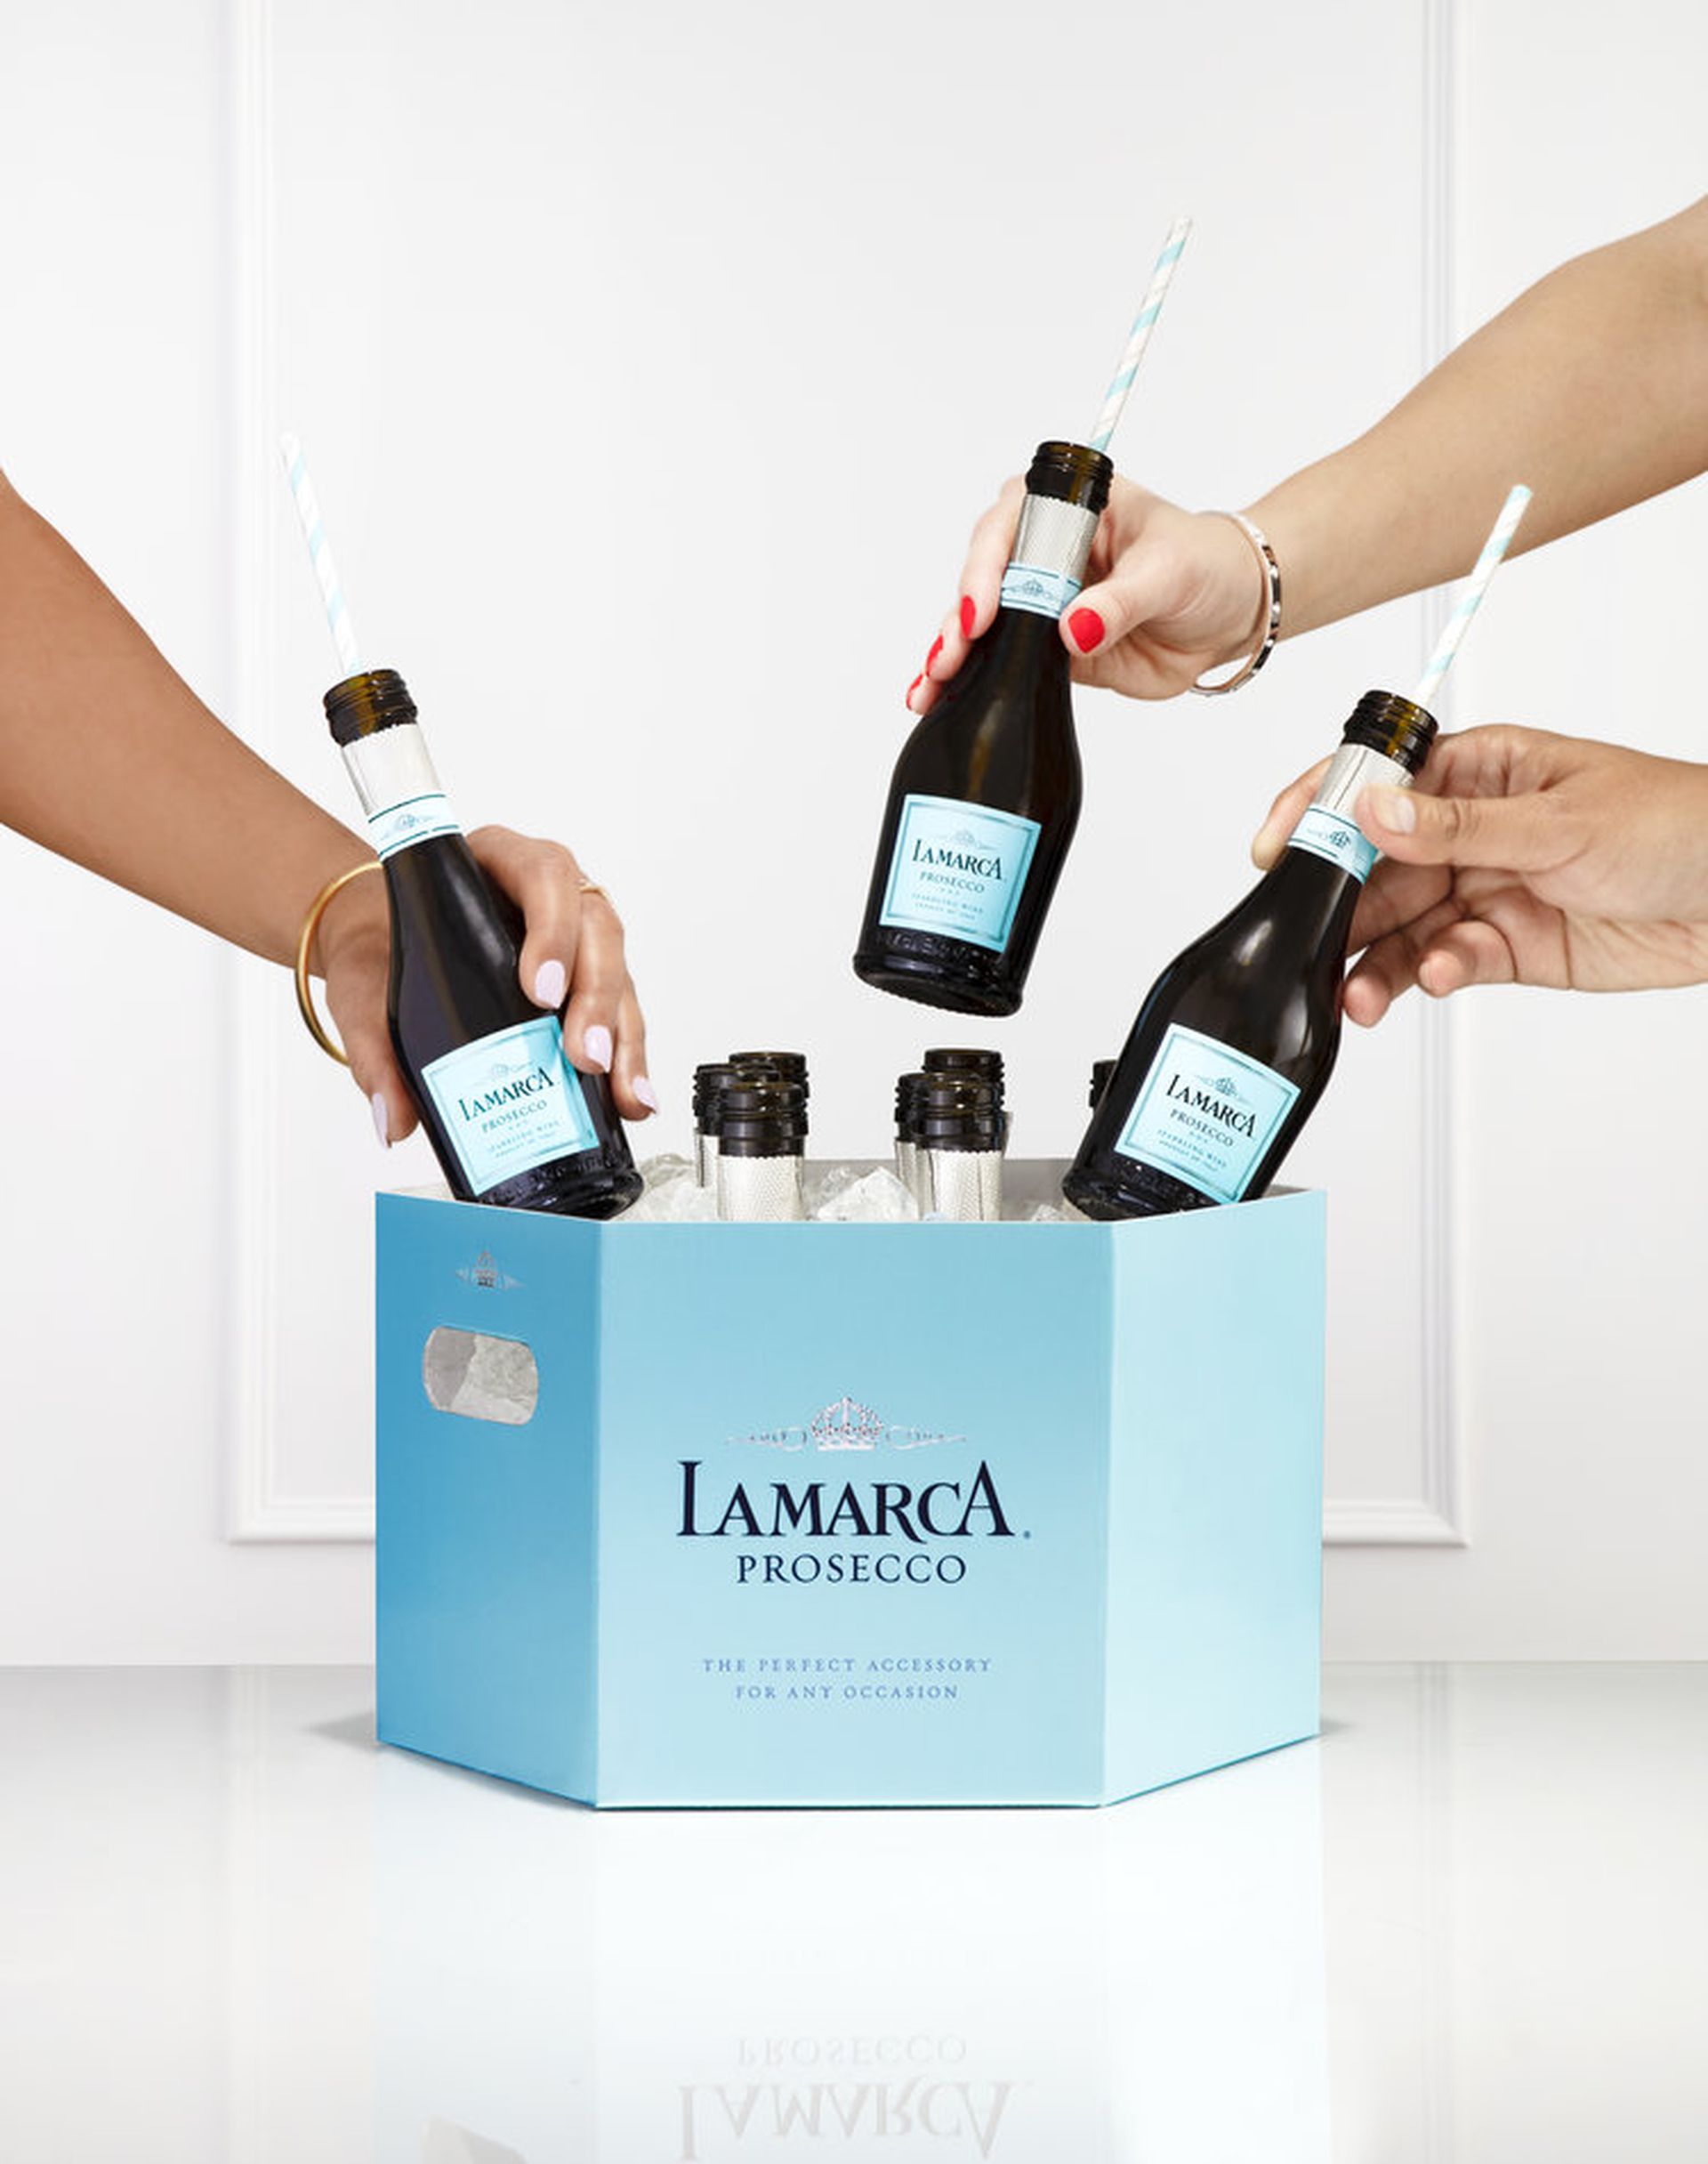 Lamarca Wine hand taking lamarca wine from a box